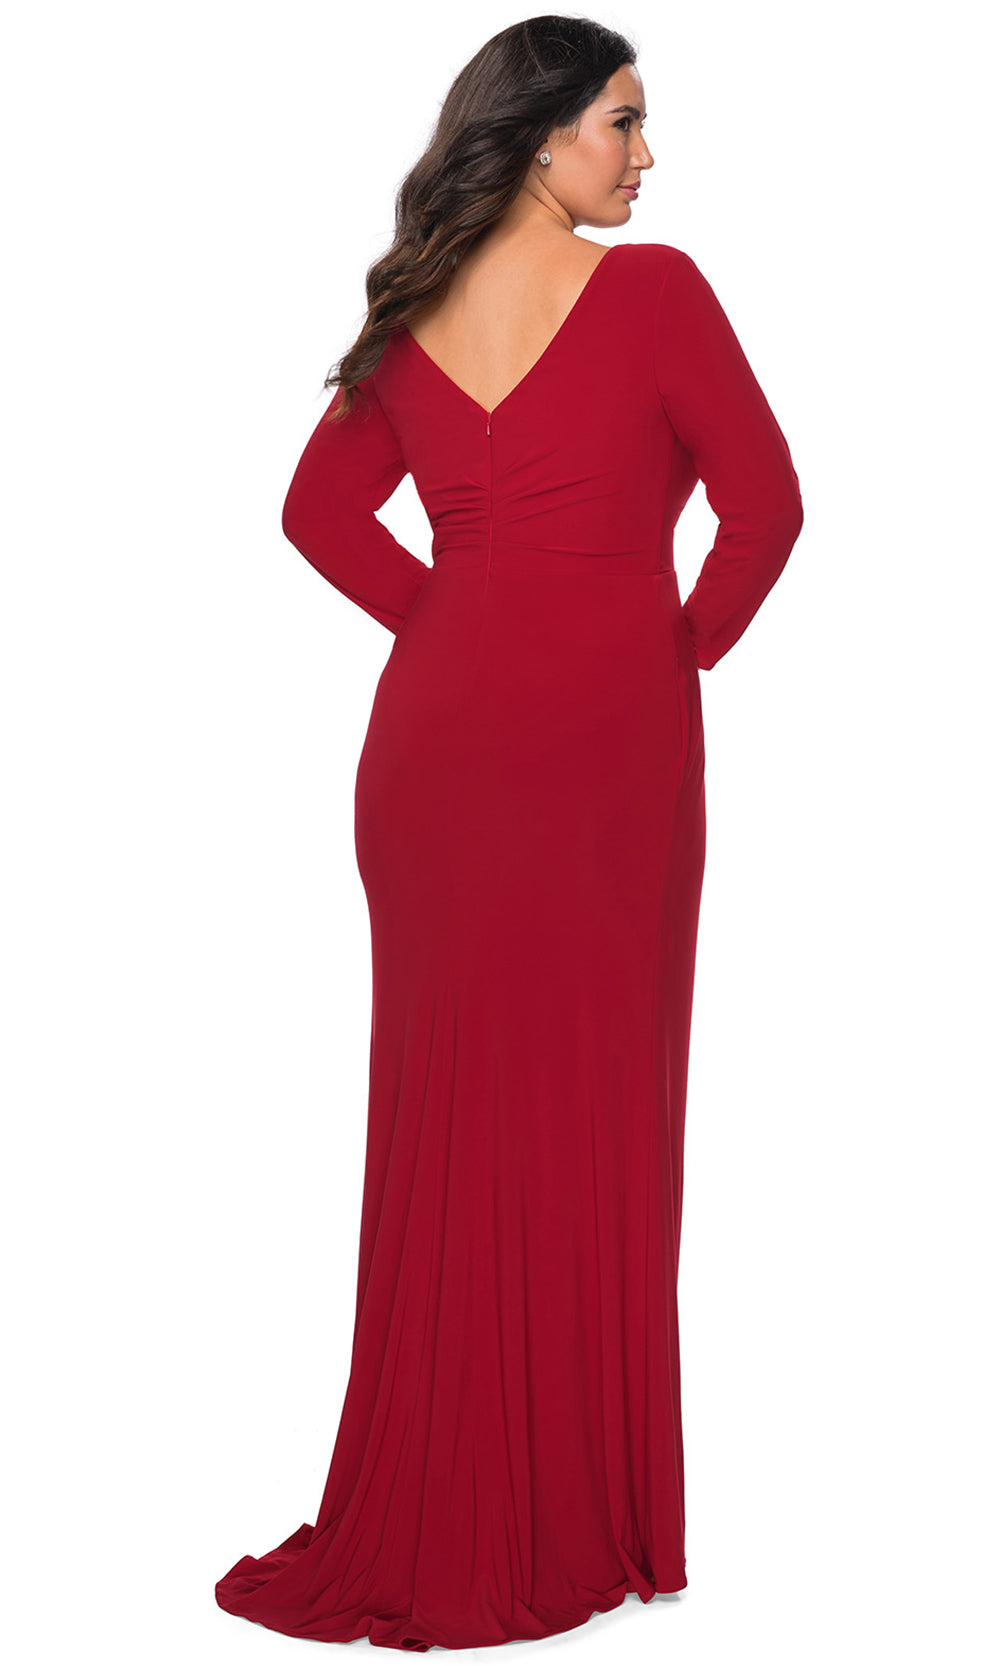 La Femme - 29044 V Neck Long Sleeves Sheath Dress In Red